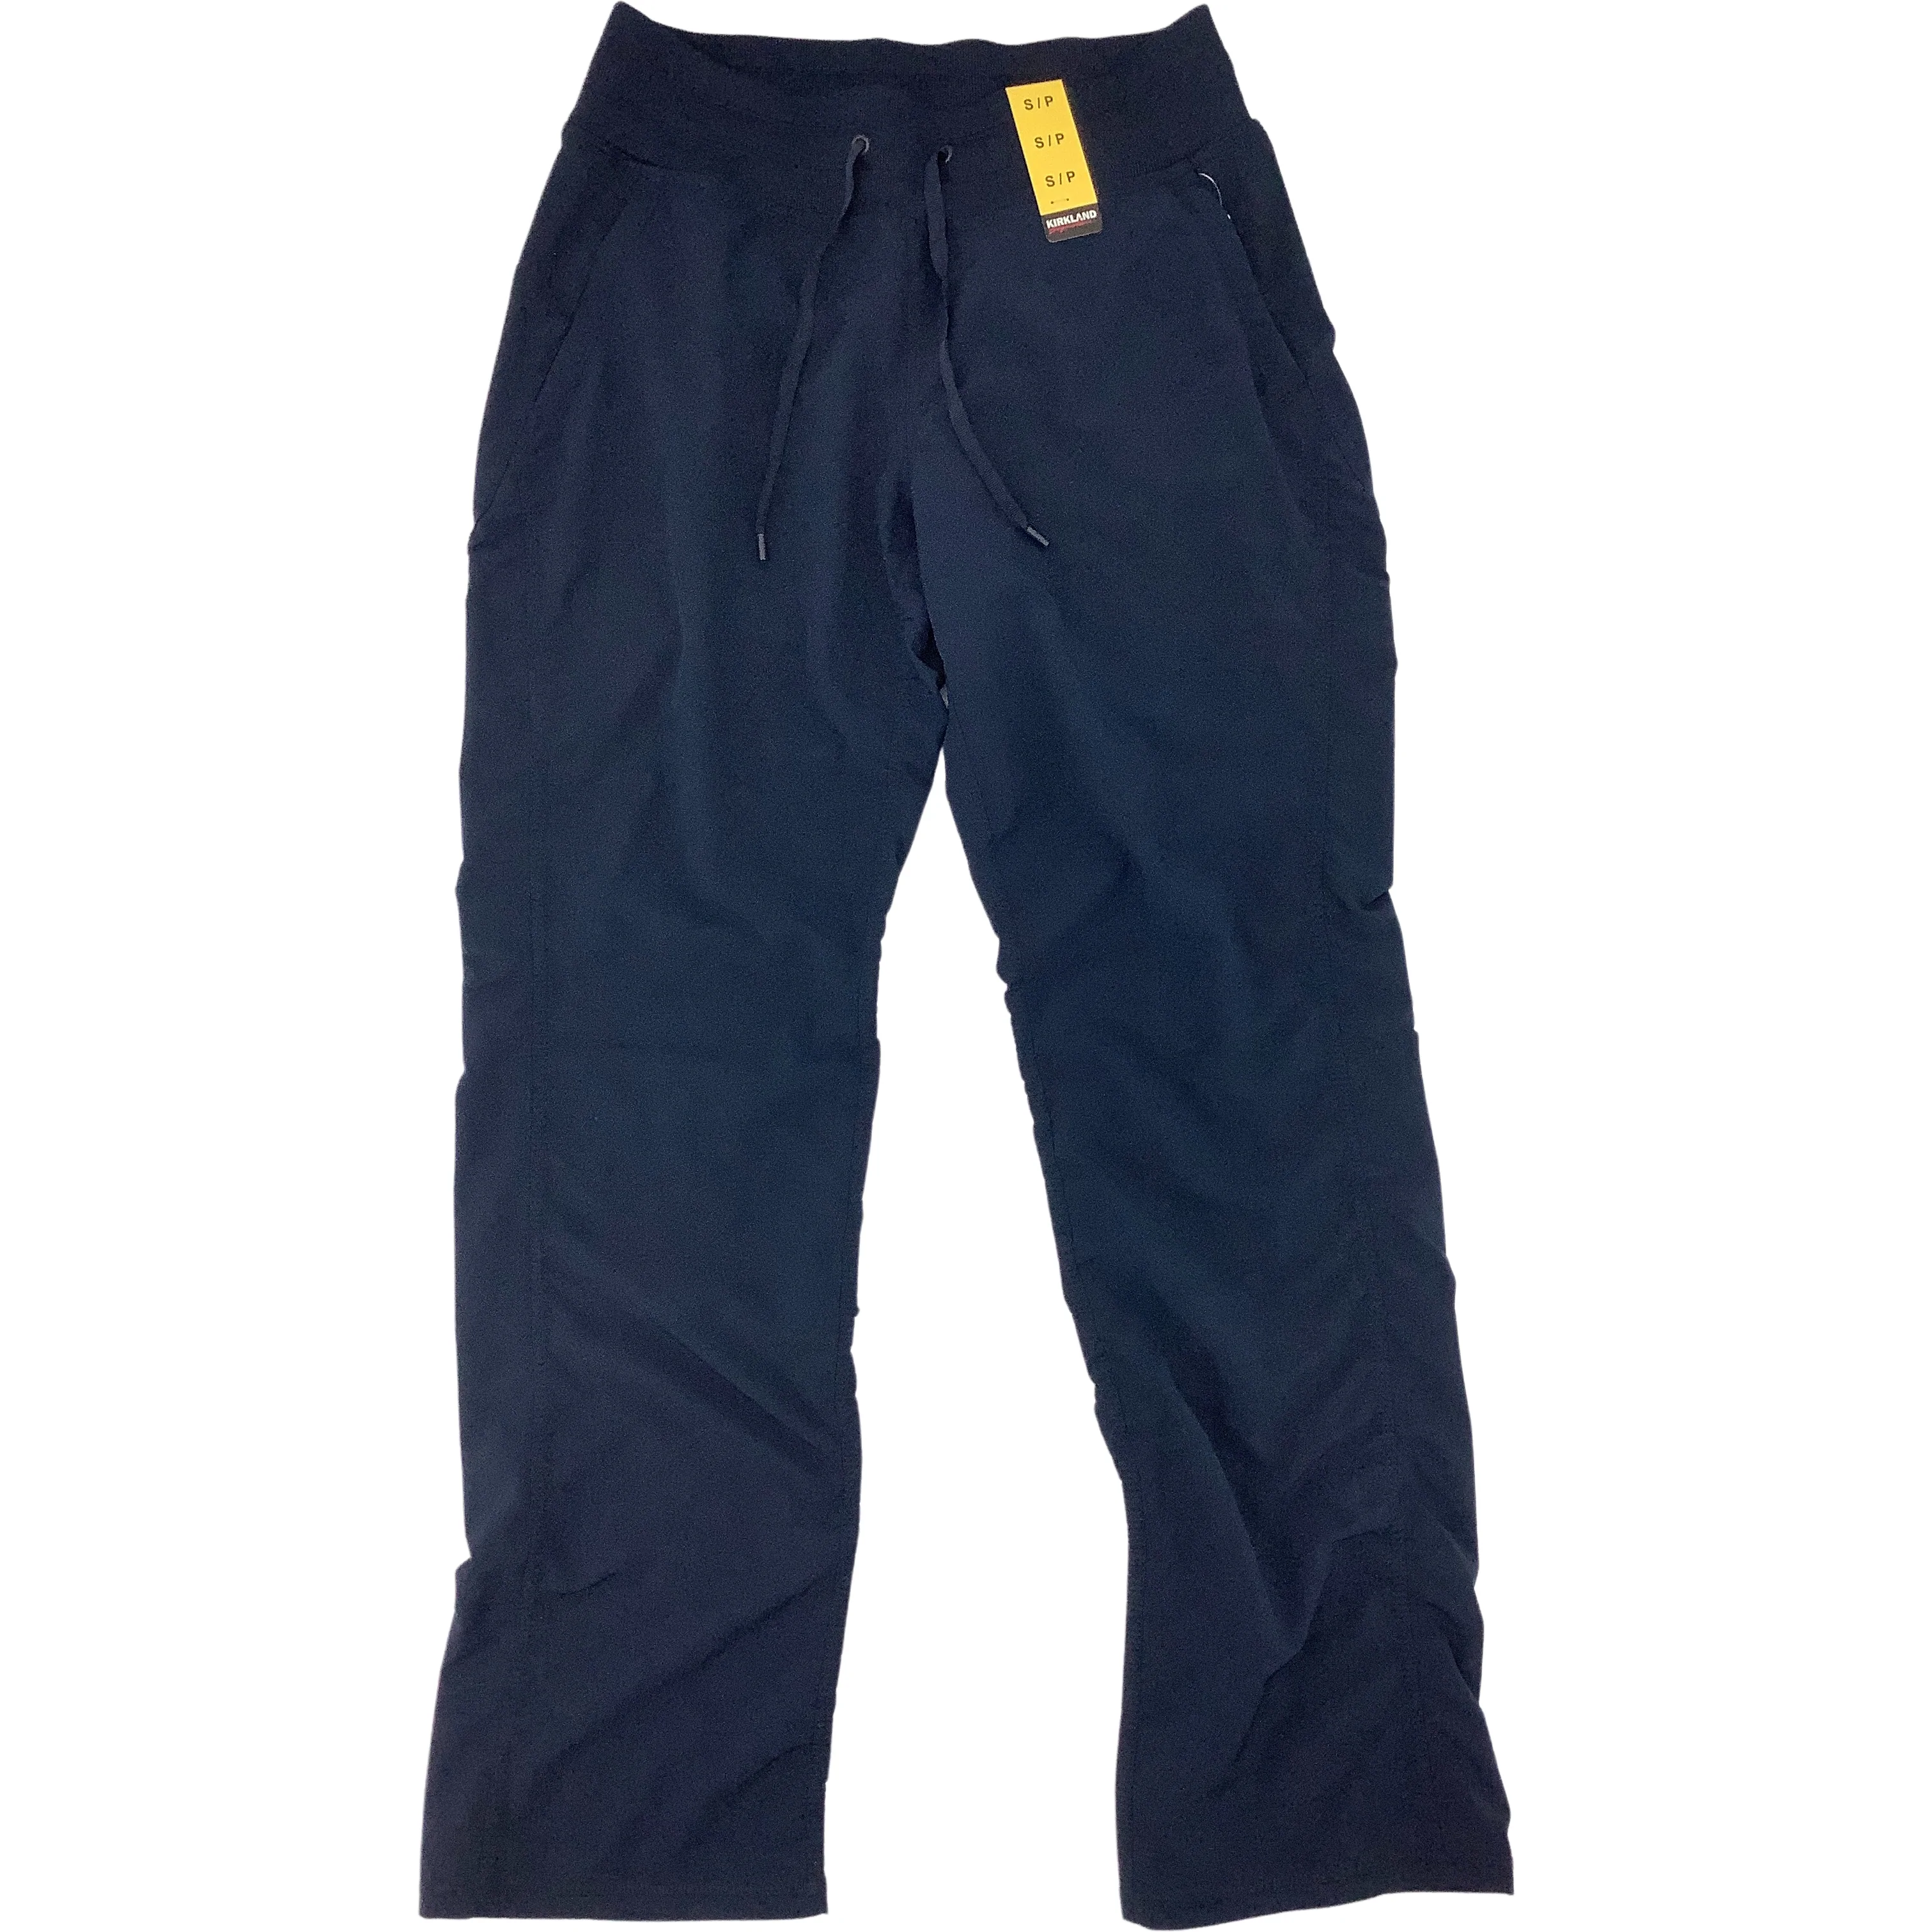 Kirkland Women's Woven Pants / Navy Blue / Women's Active Pants / Various Sizes